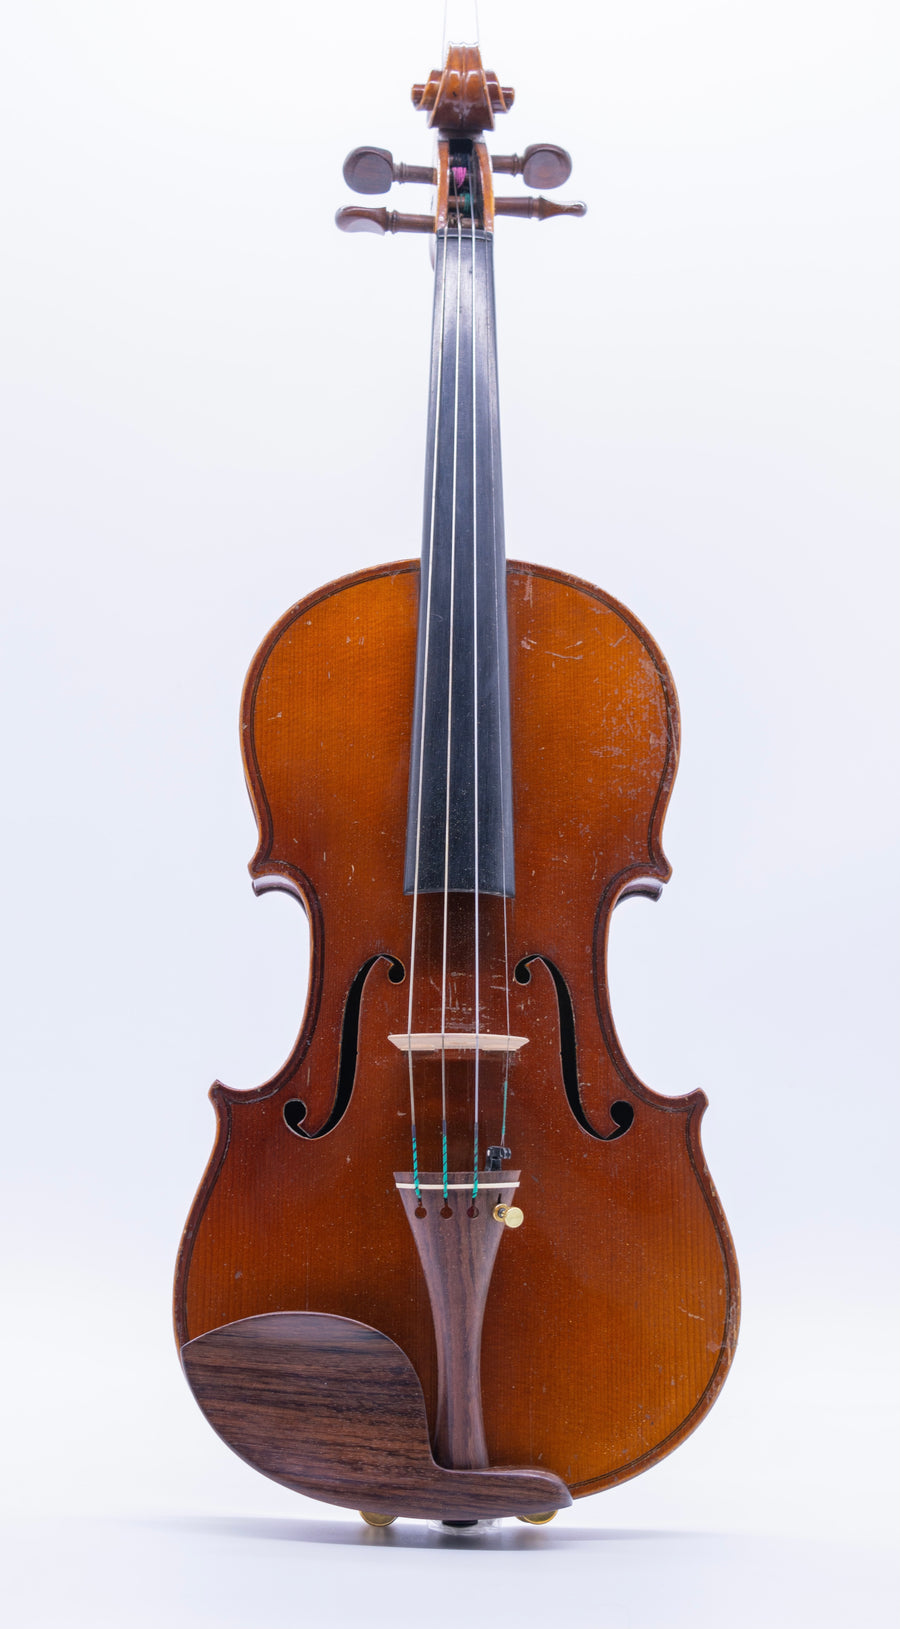 Circa 1909-1929 “Carlo Alberi” Violin from B&J. Mirecourt, France.